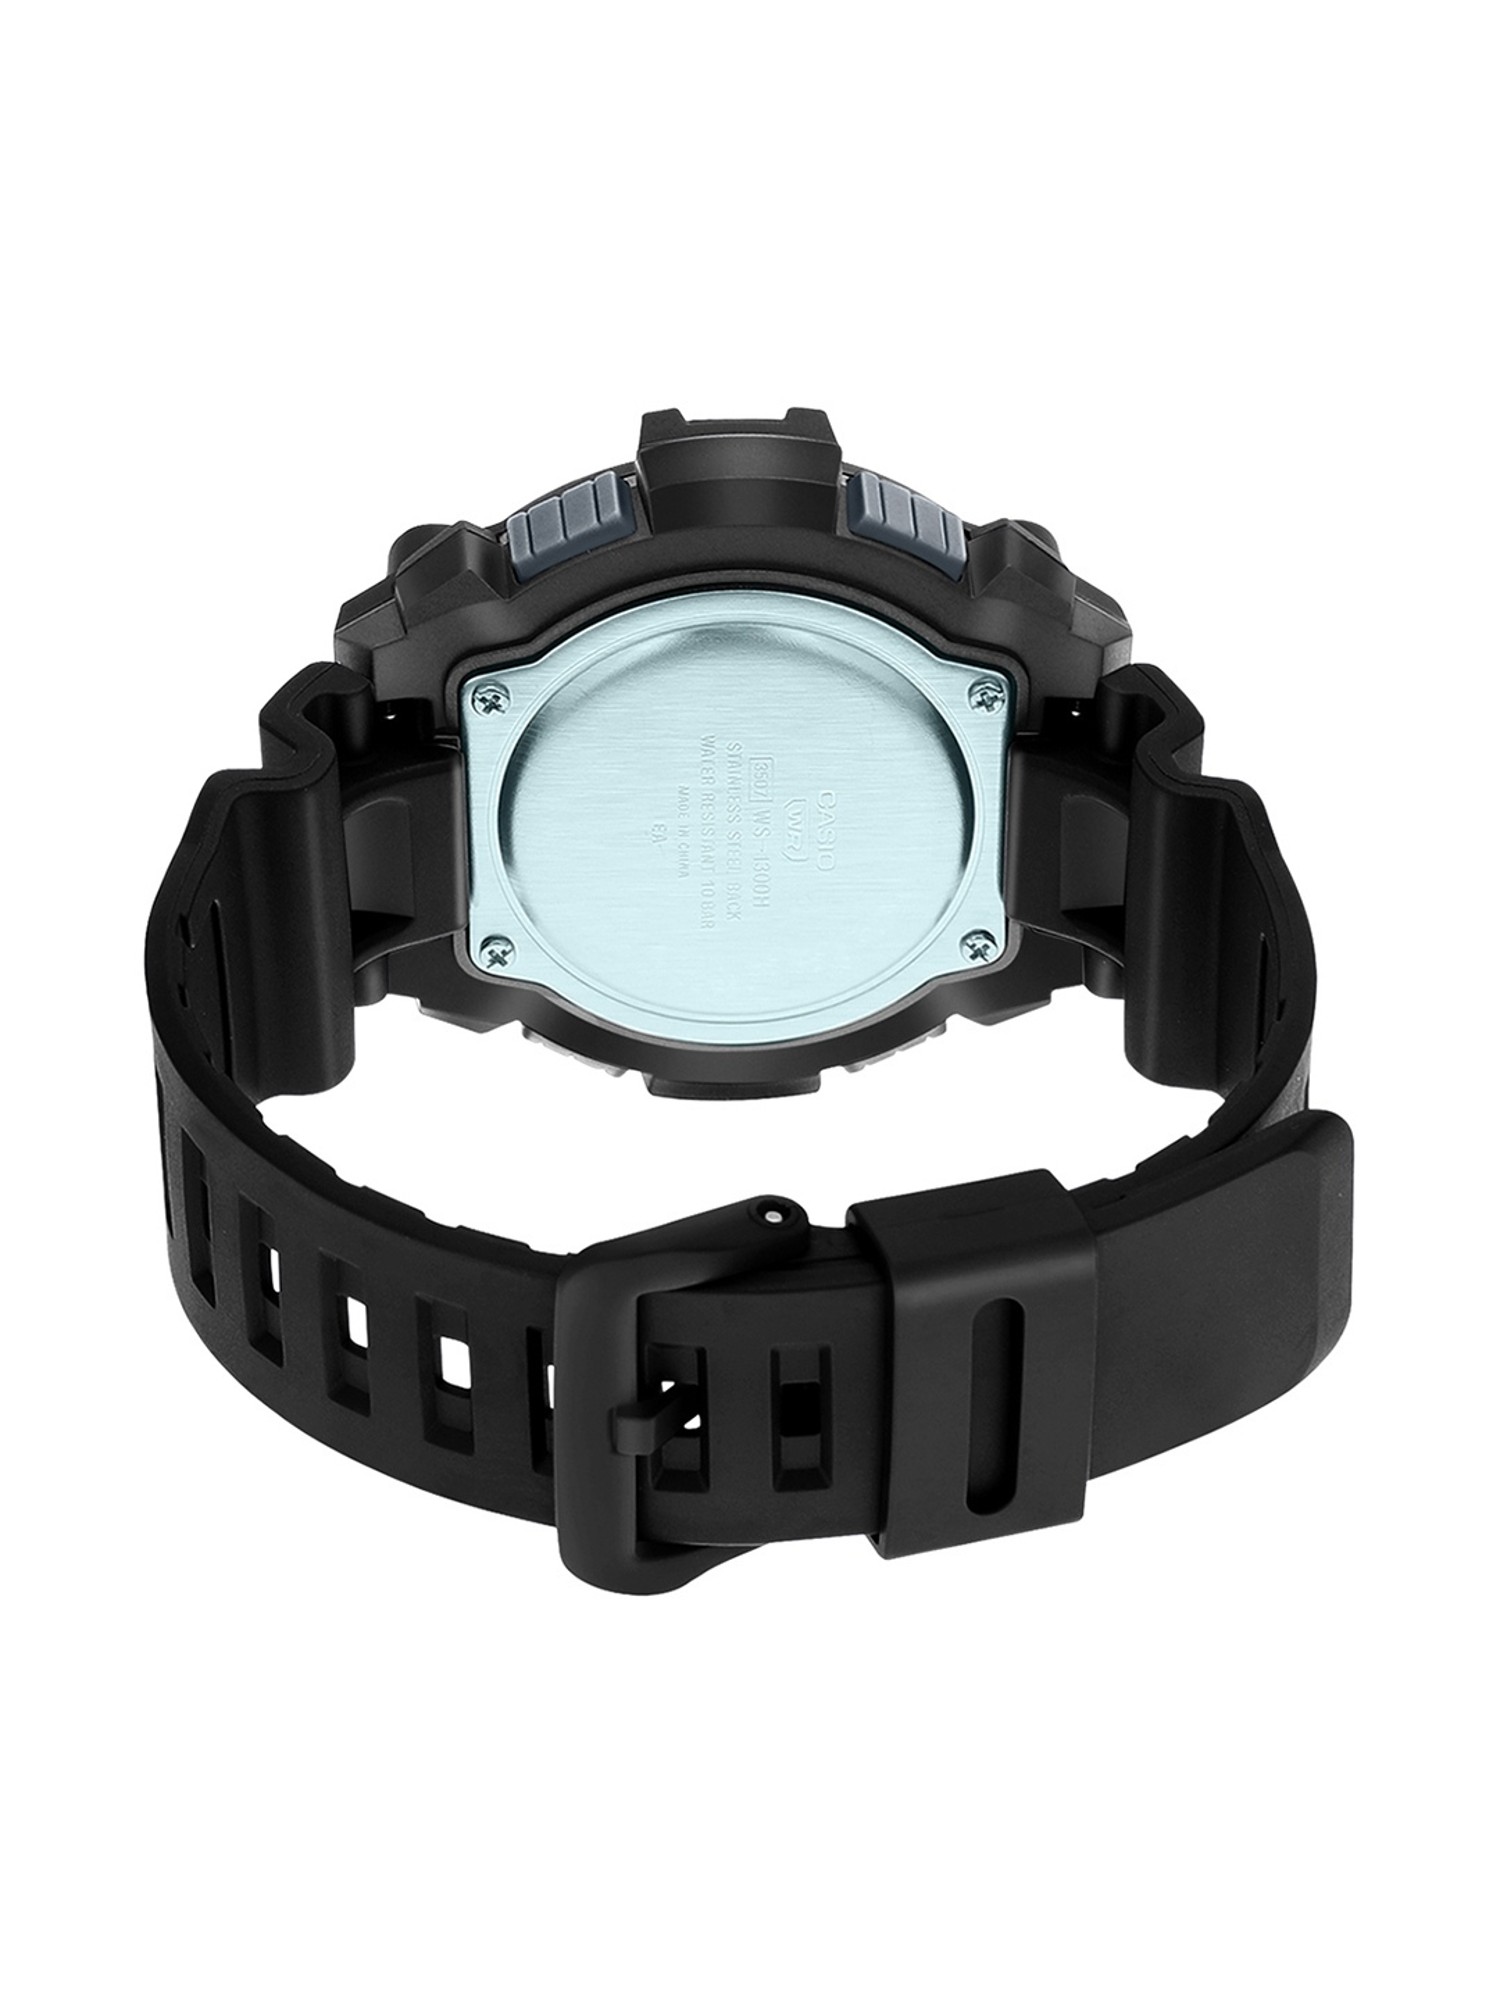 Youth Digital @ Casio Price CLiQ Best WS-1300H-1AVDF Unisex Watch Buy at Tata